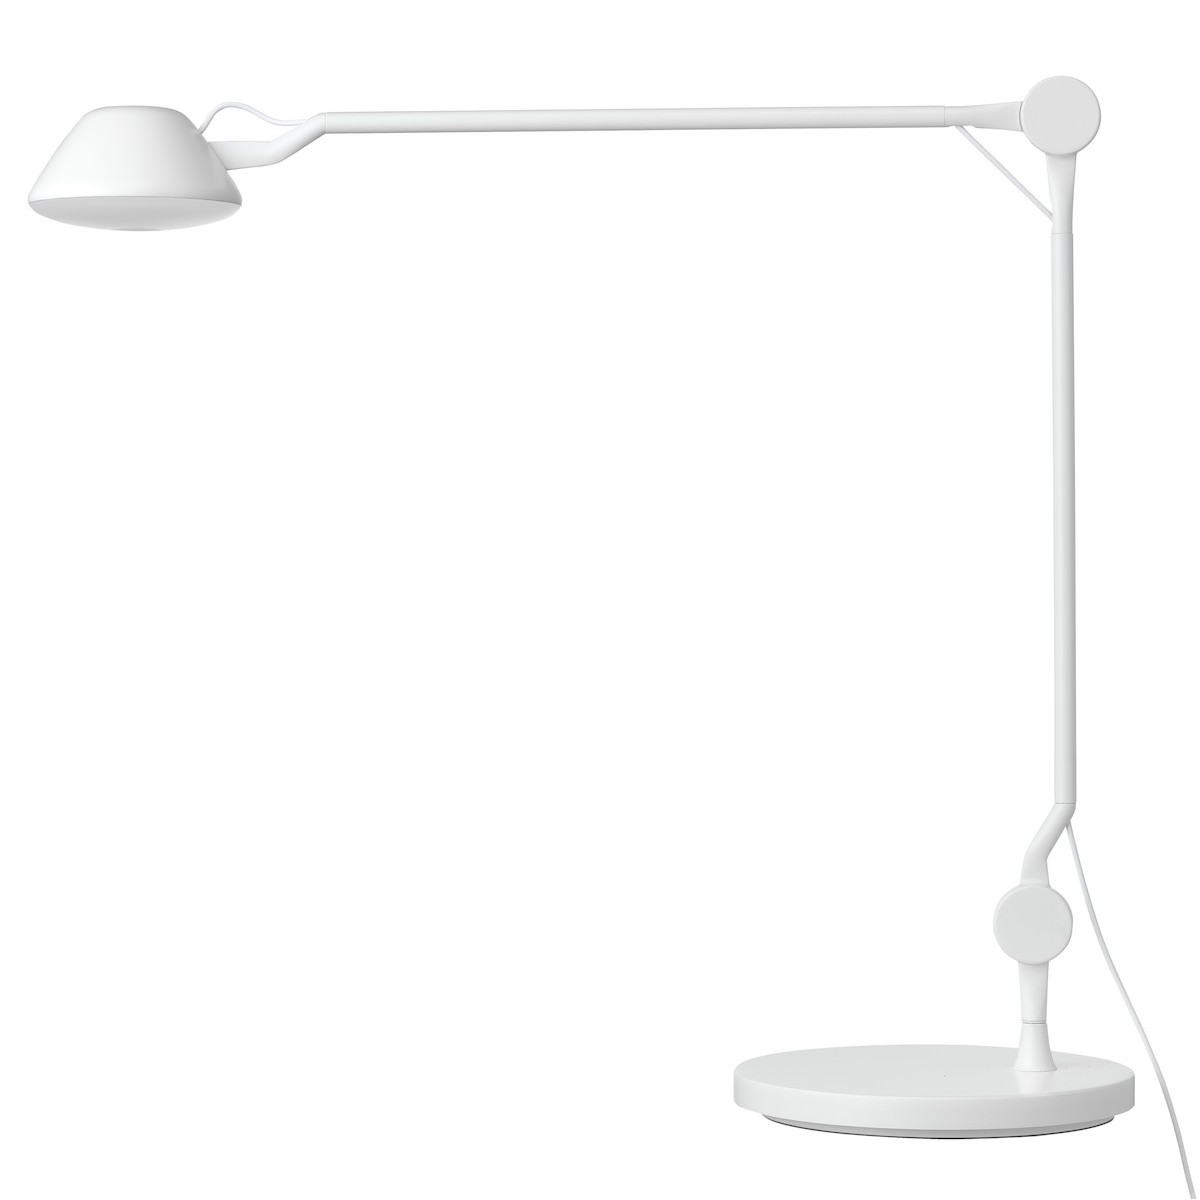 blanc - lampe de table AQ01